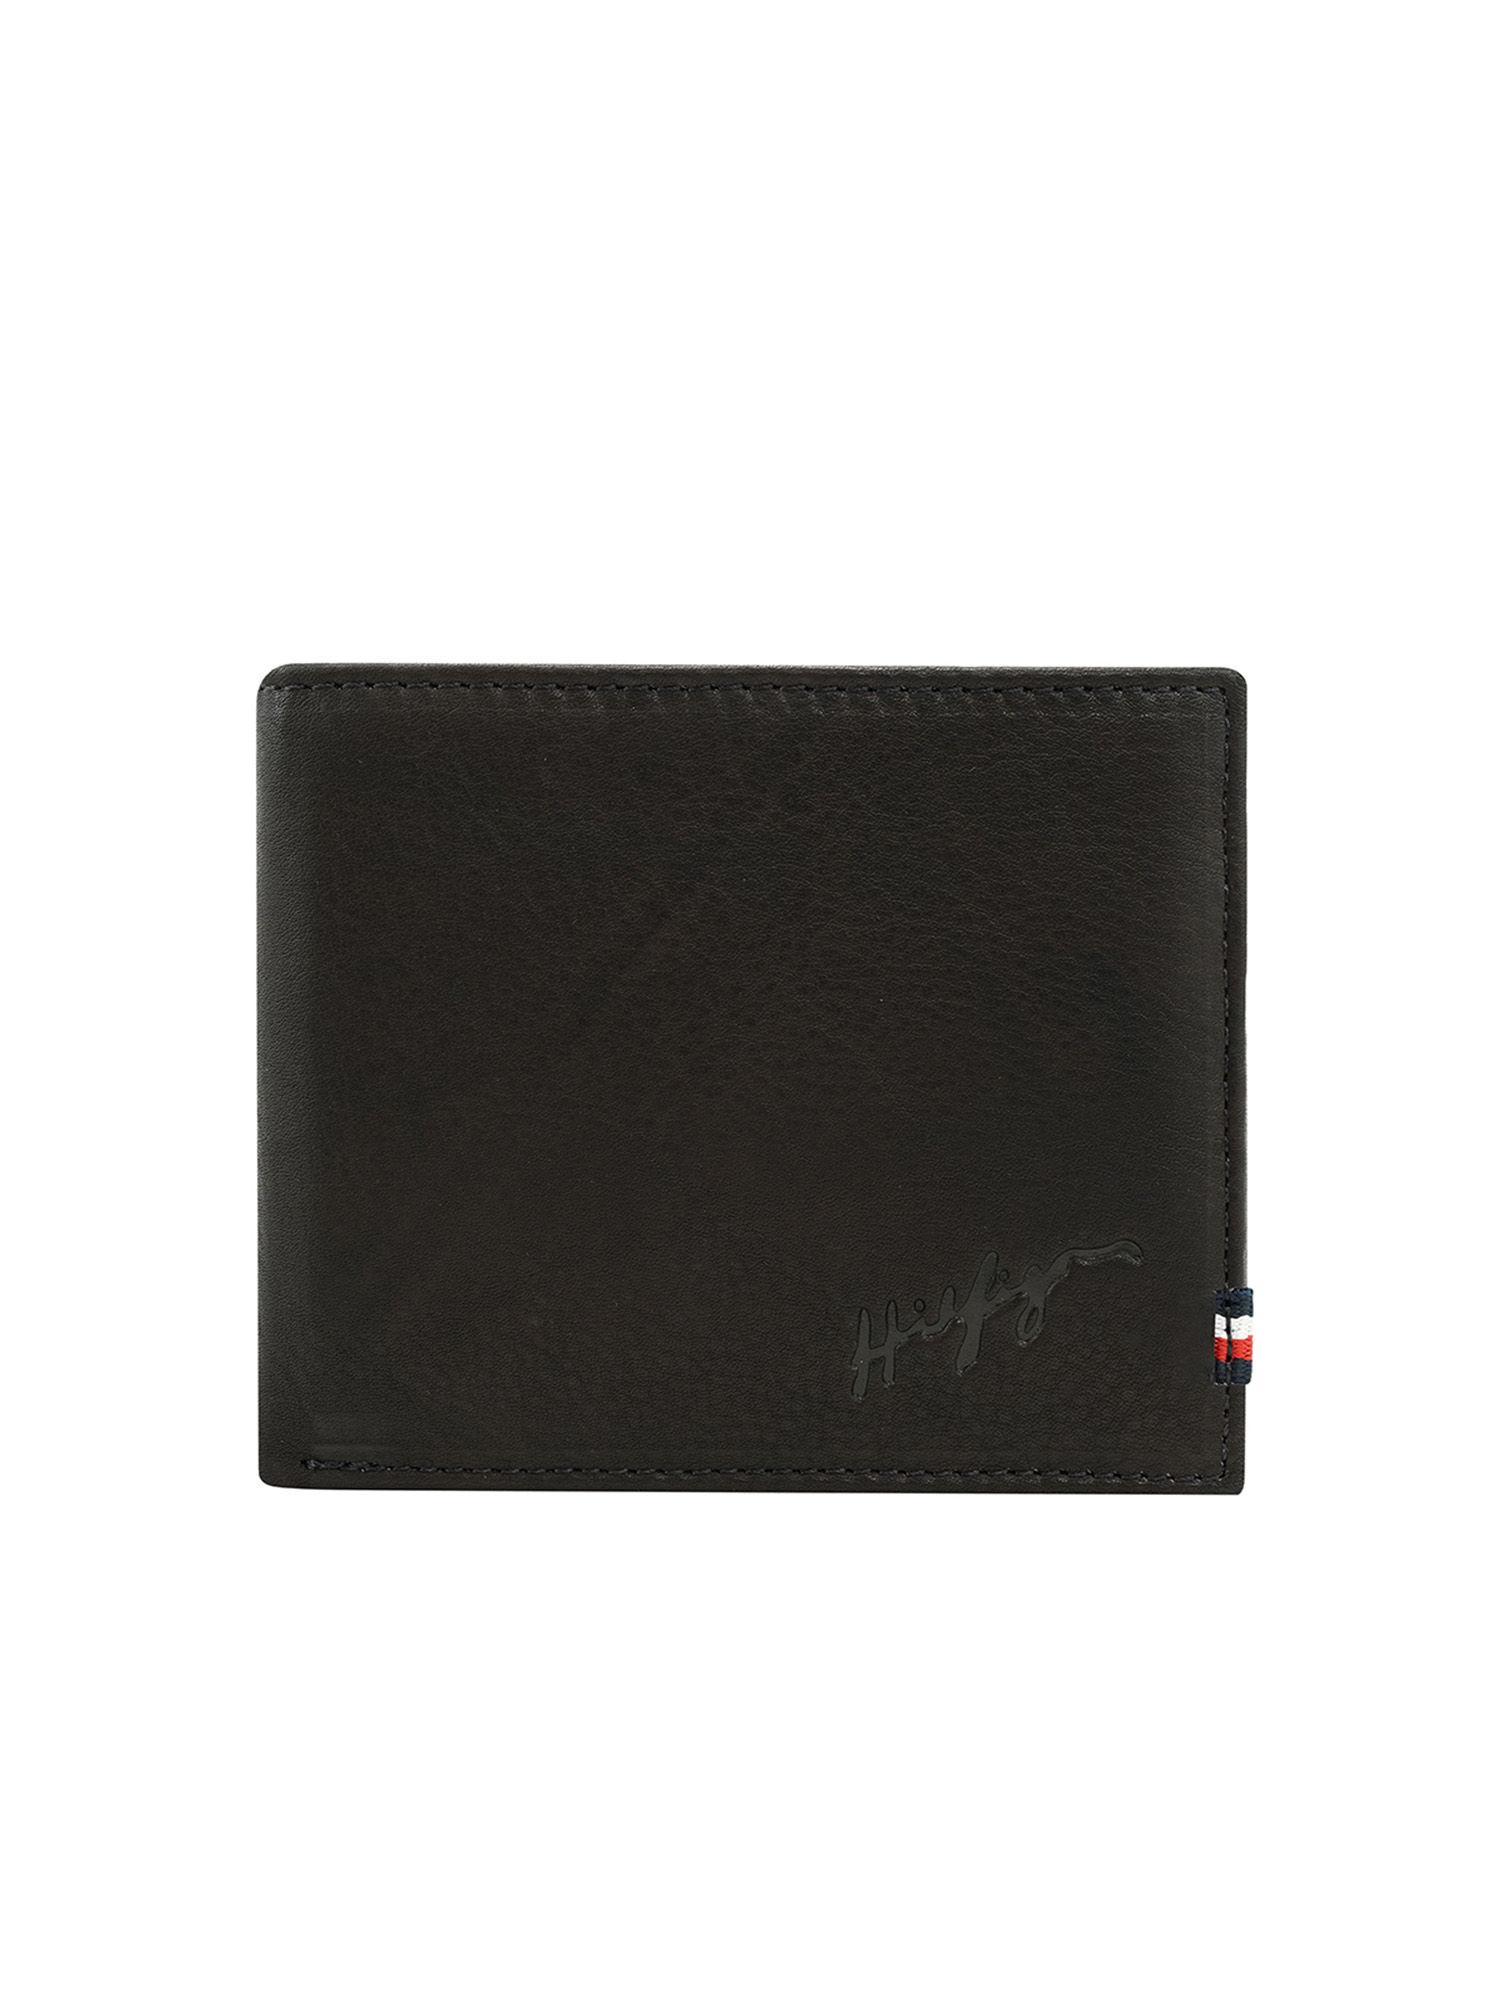 brown branden pass case wallet